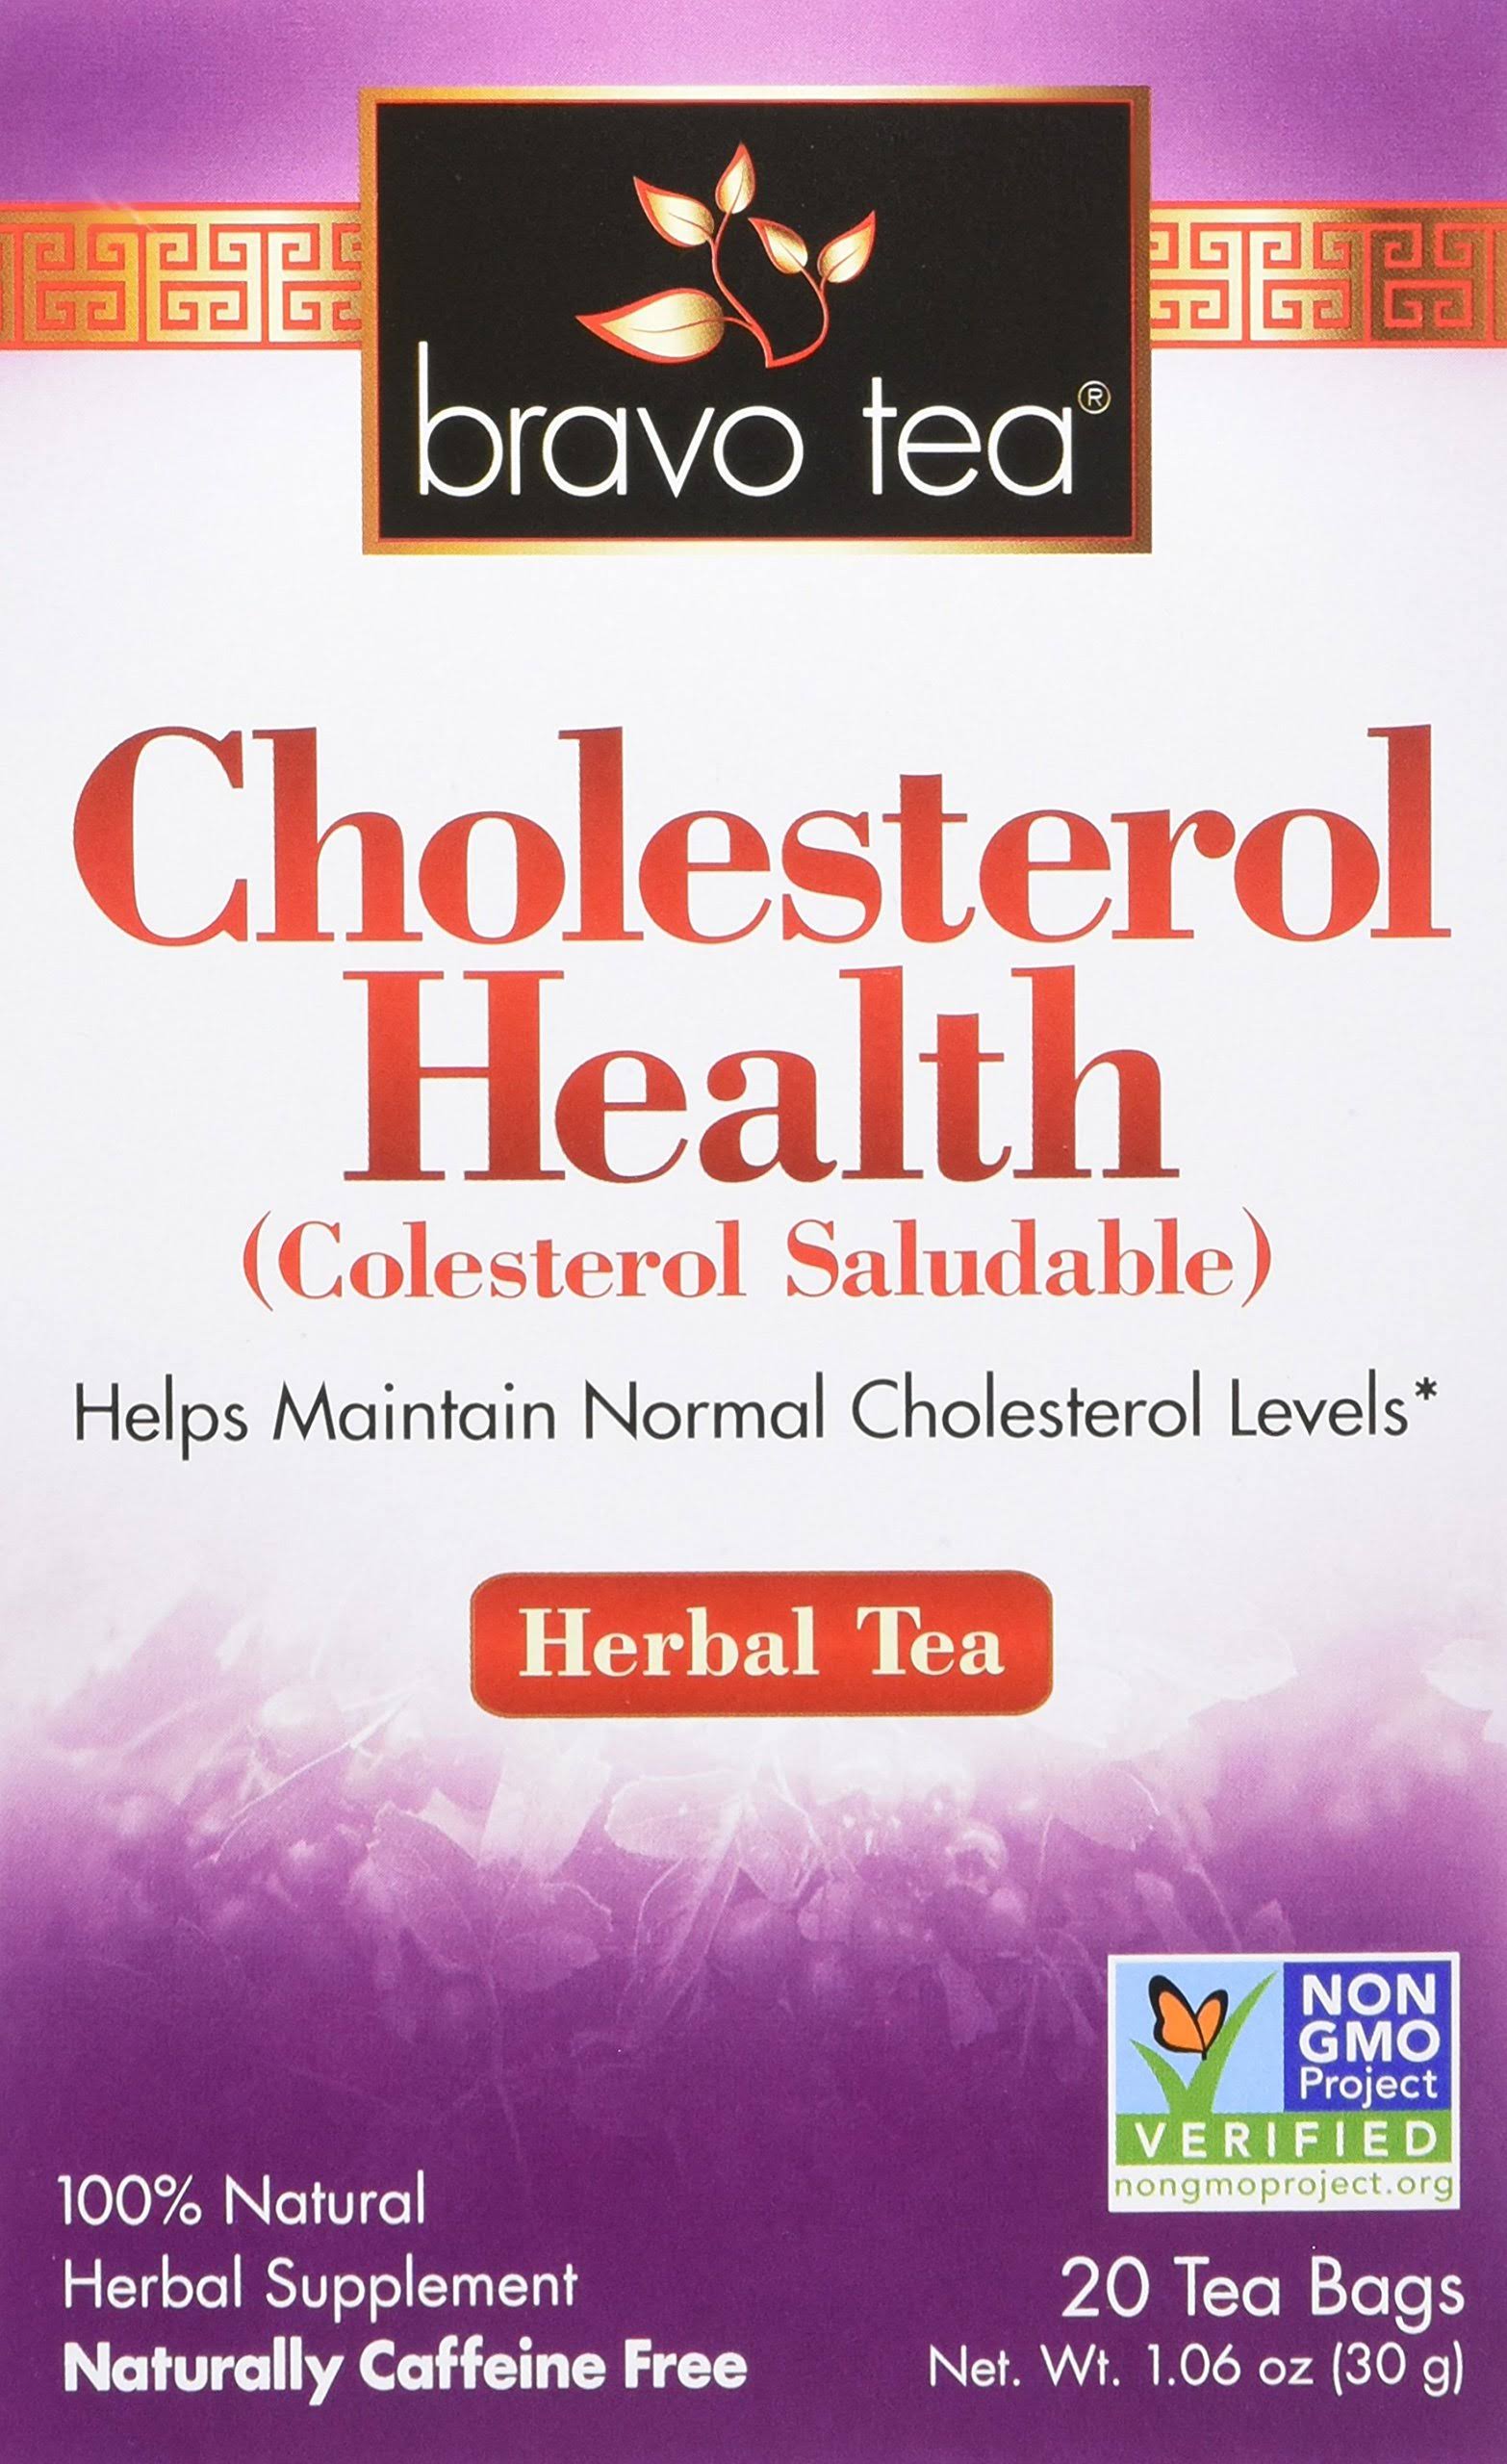 Bravo Tea Cholesterol Health Herbal Tea - 20 Tea Bags, 30g